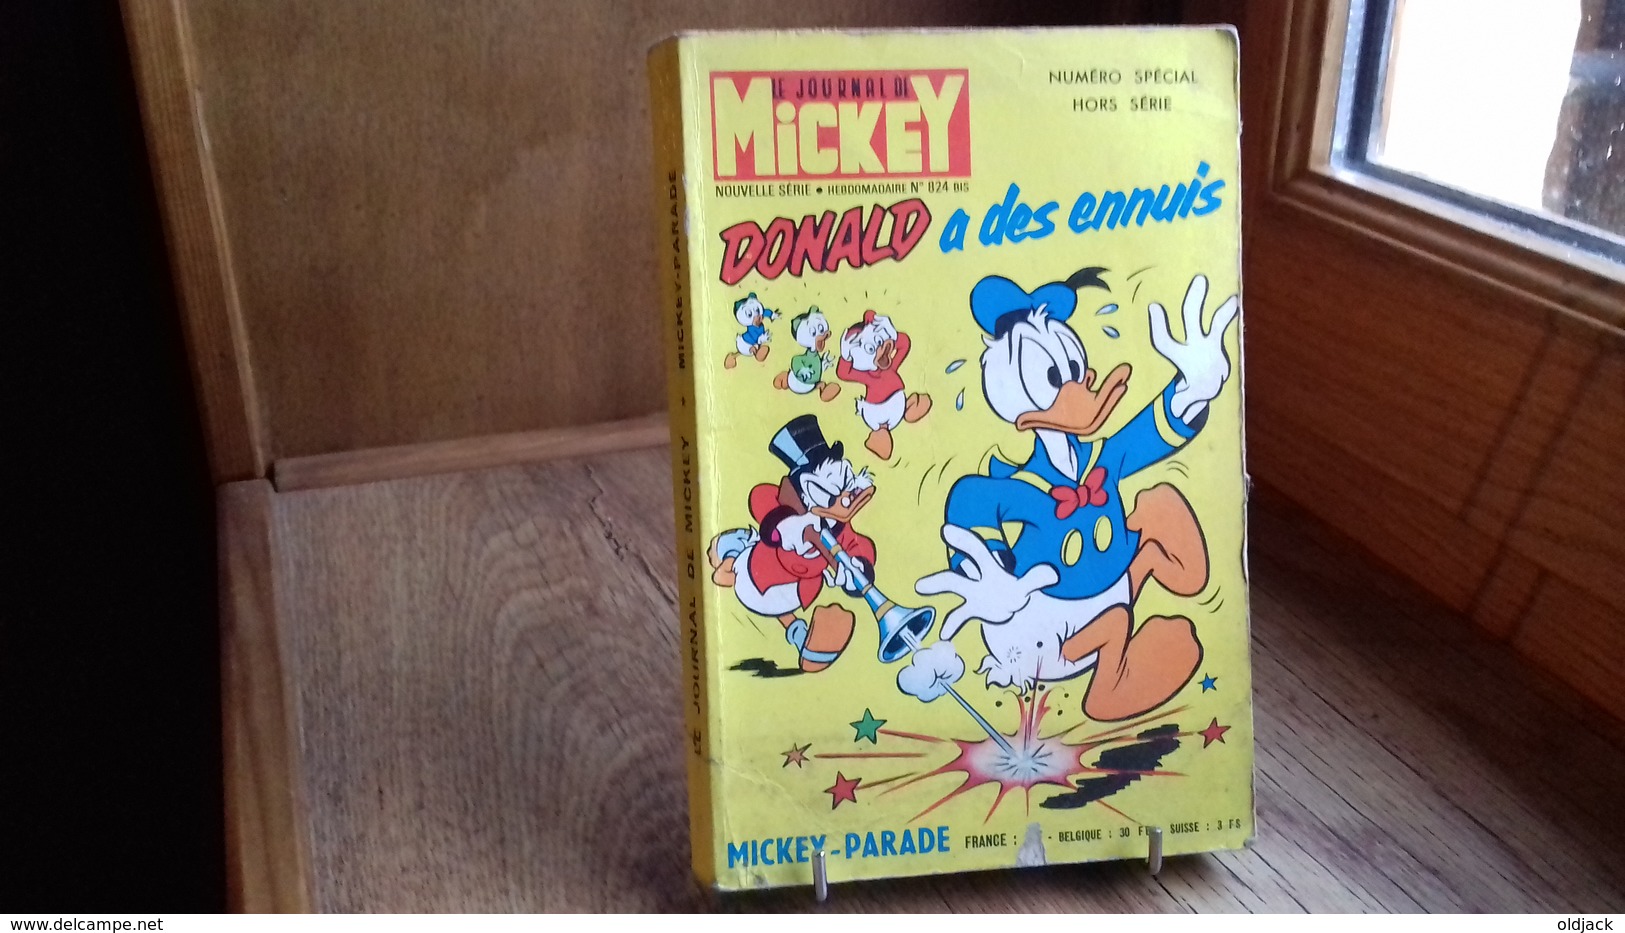 MICKEY PARADE (nvelle Série)Donald A Des Ennuis.N°824 Bis H-SERIE.1968(261R10) - Mickey Parade